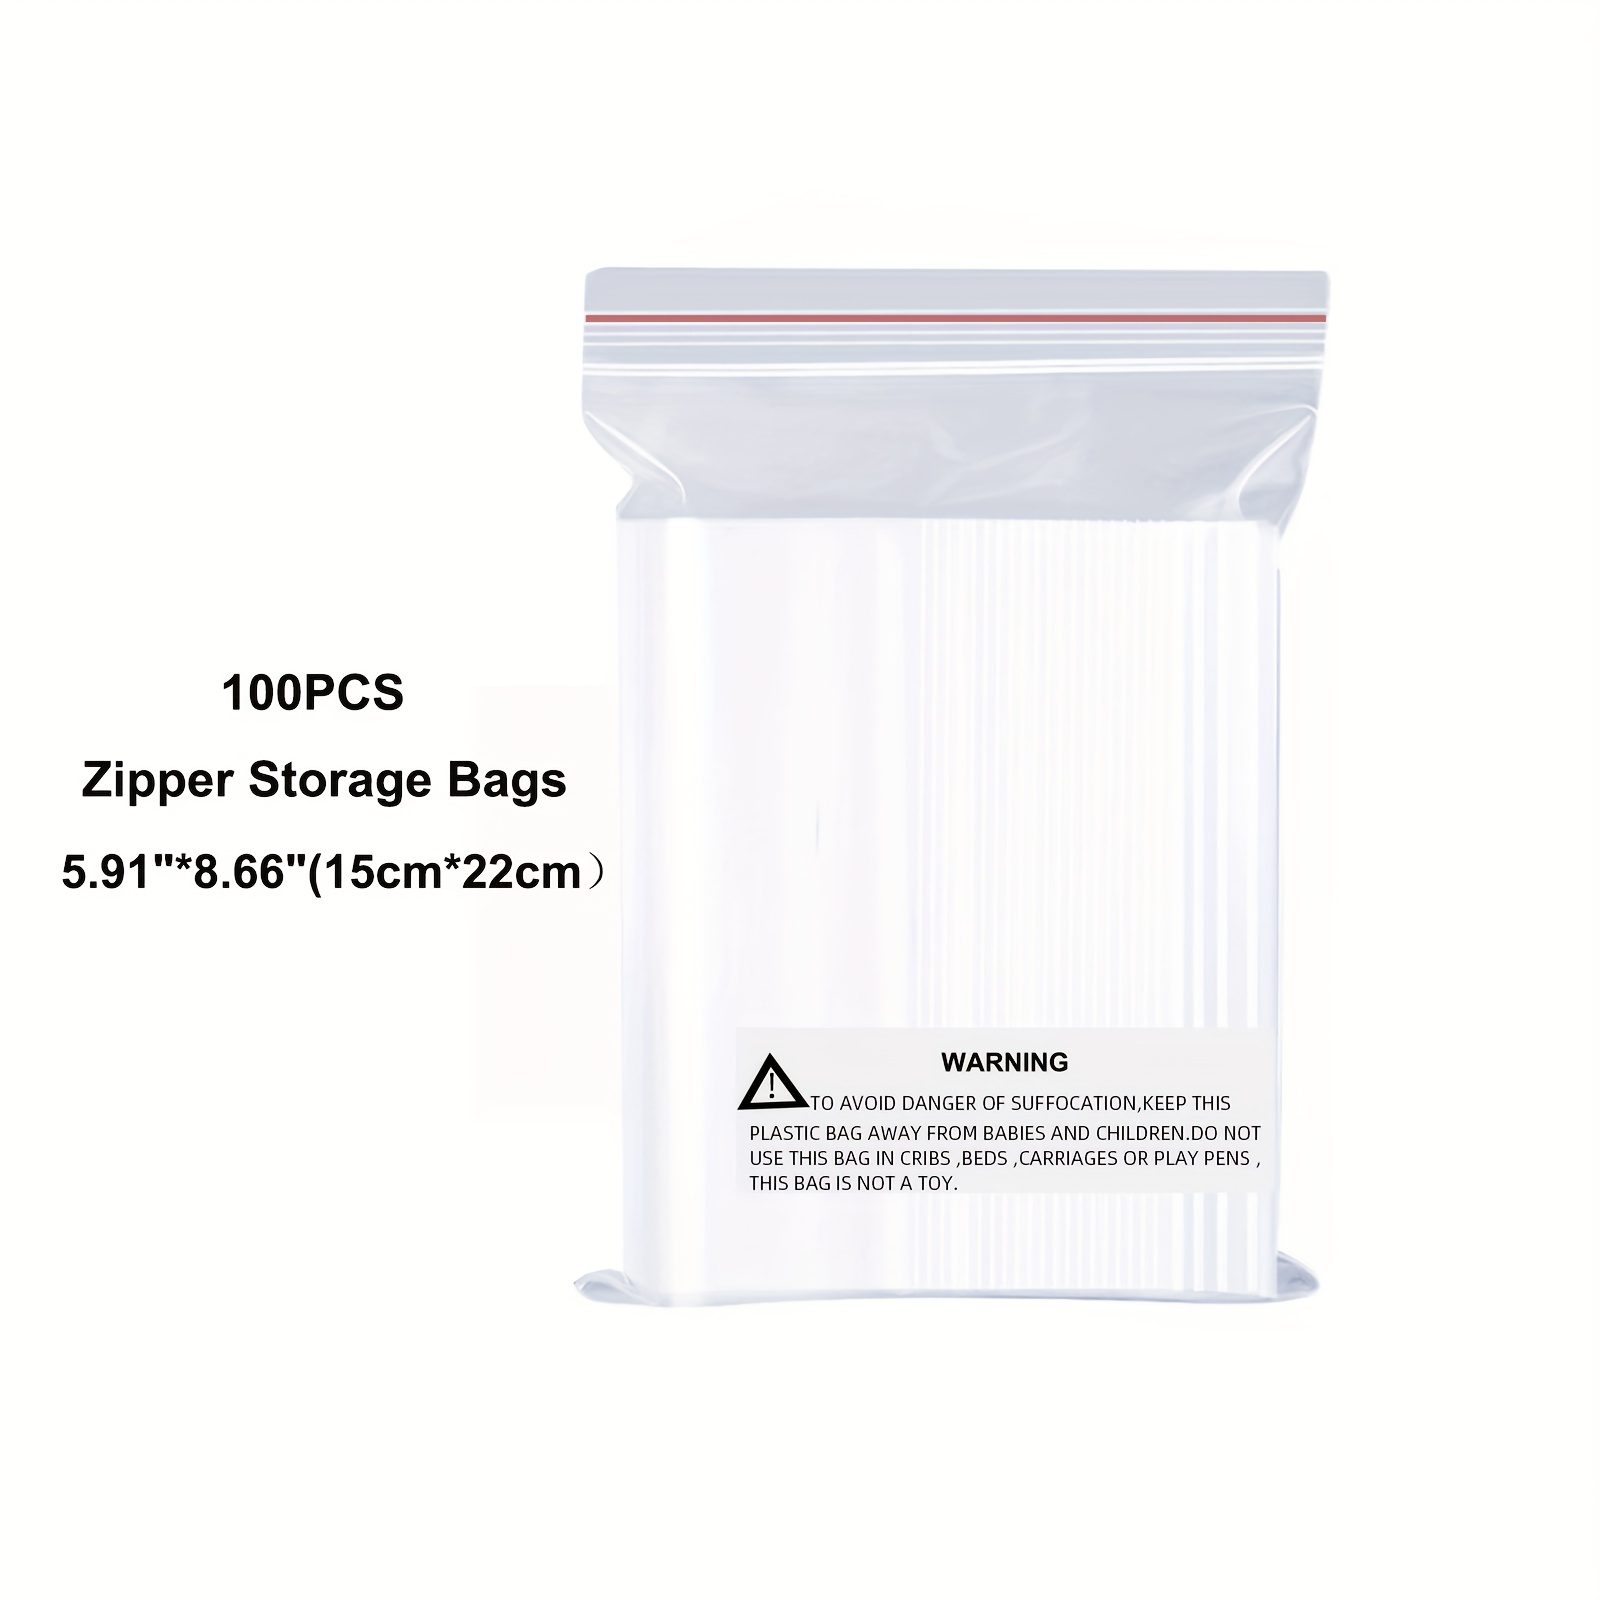 Zipper Lock Plastic Bags